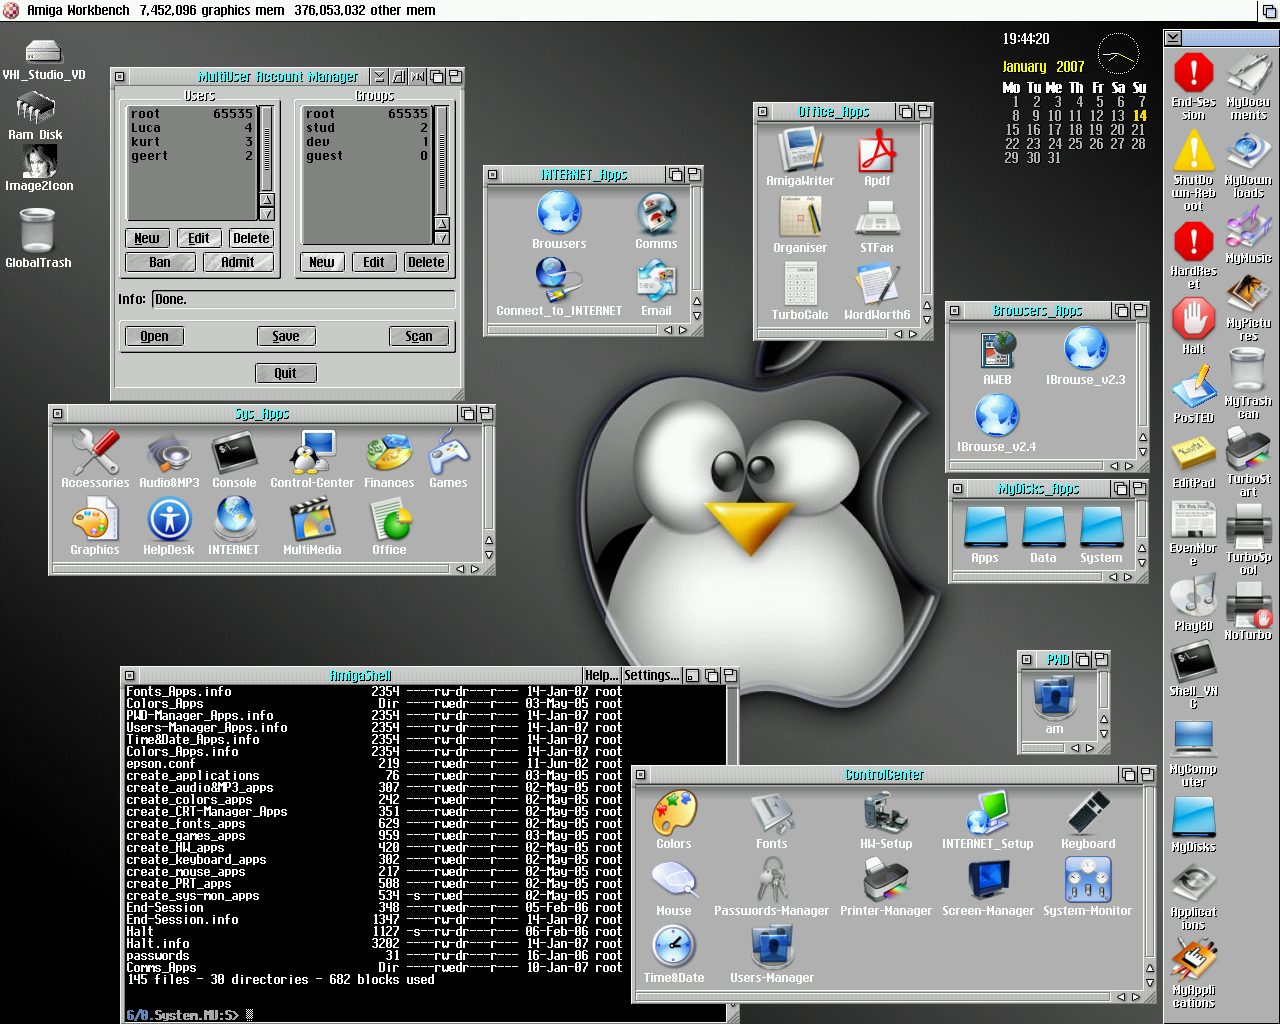 Another screenshot of my Multiuser Amiga.